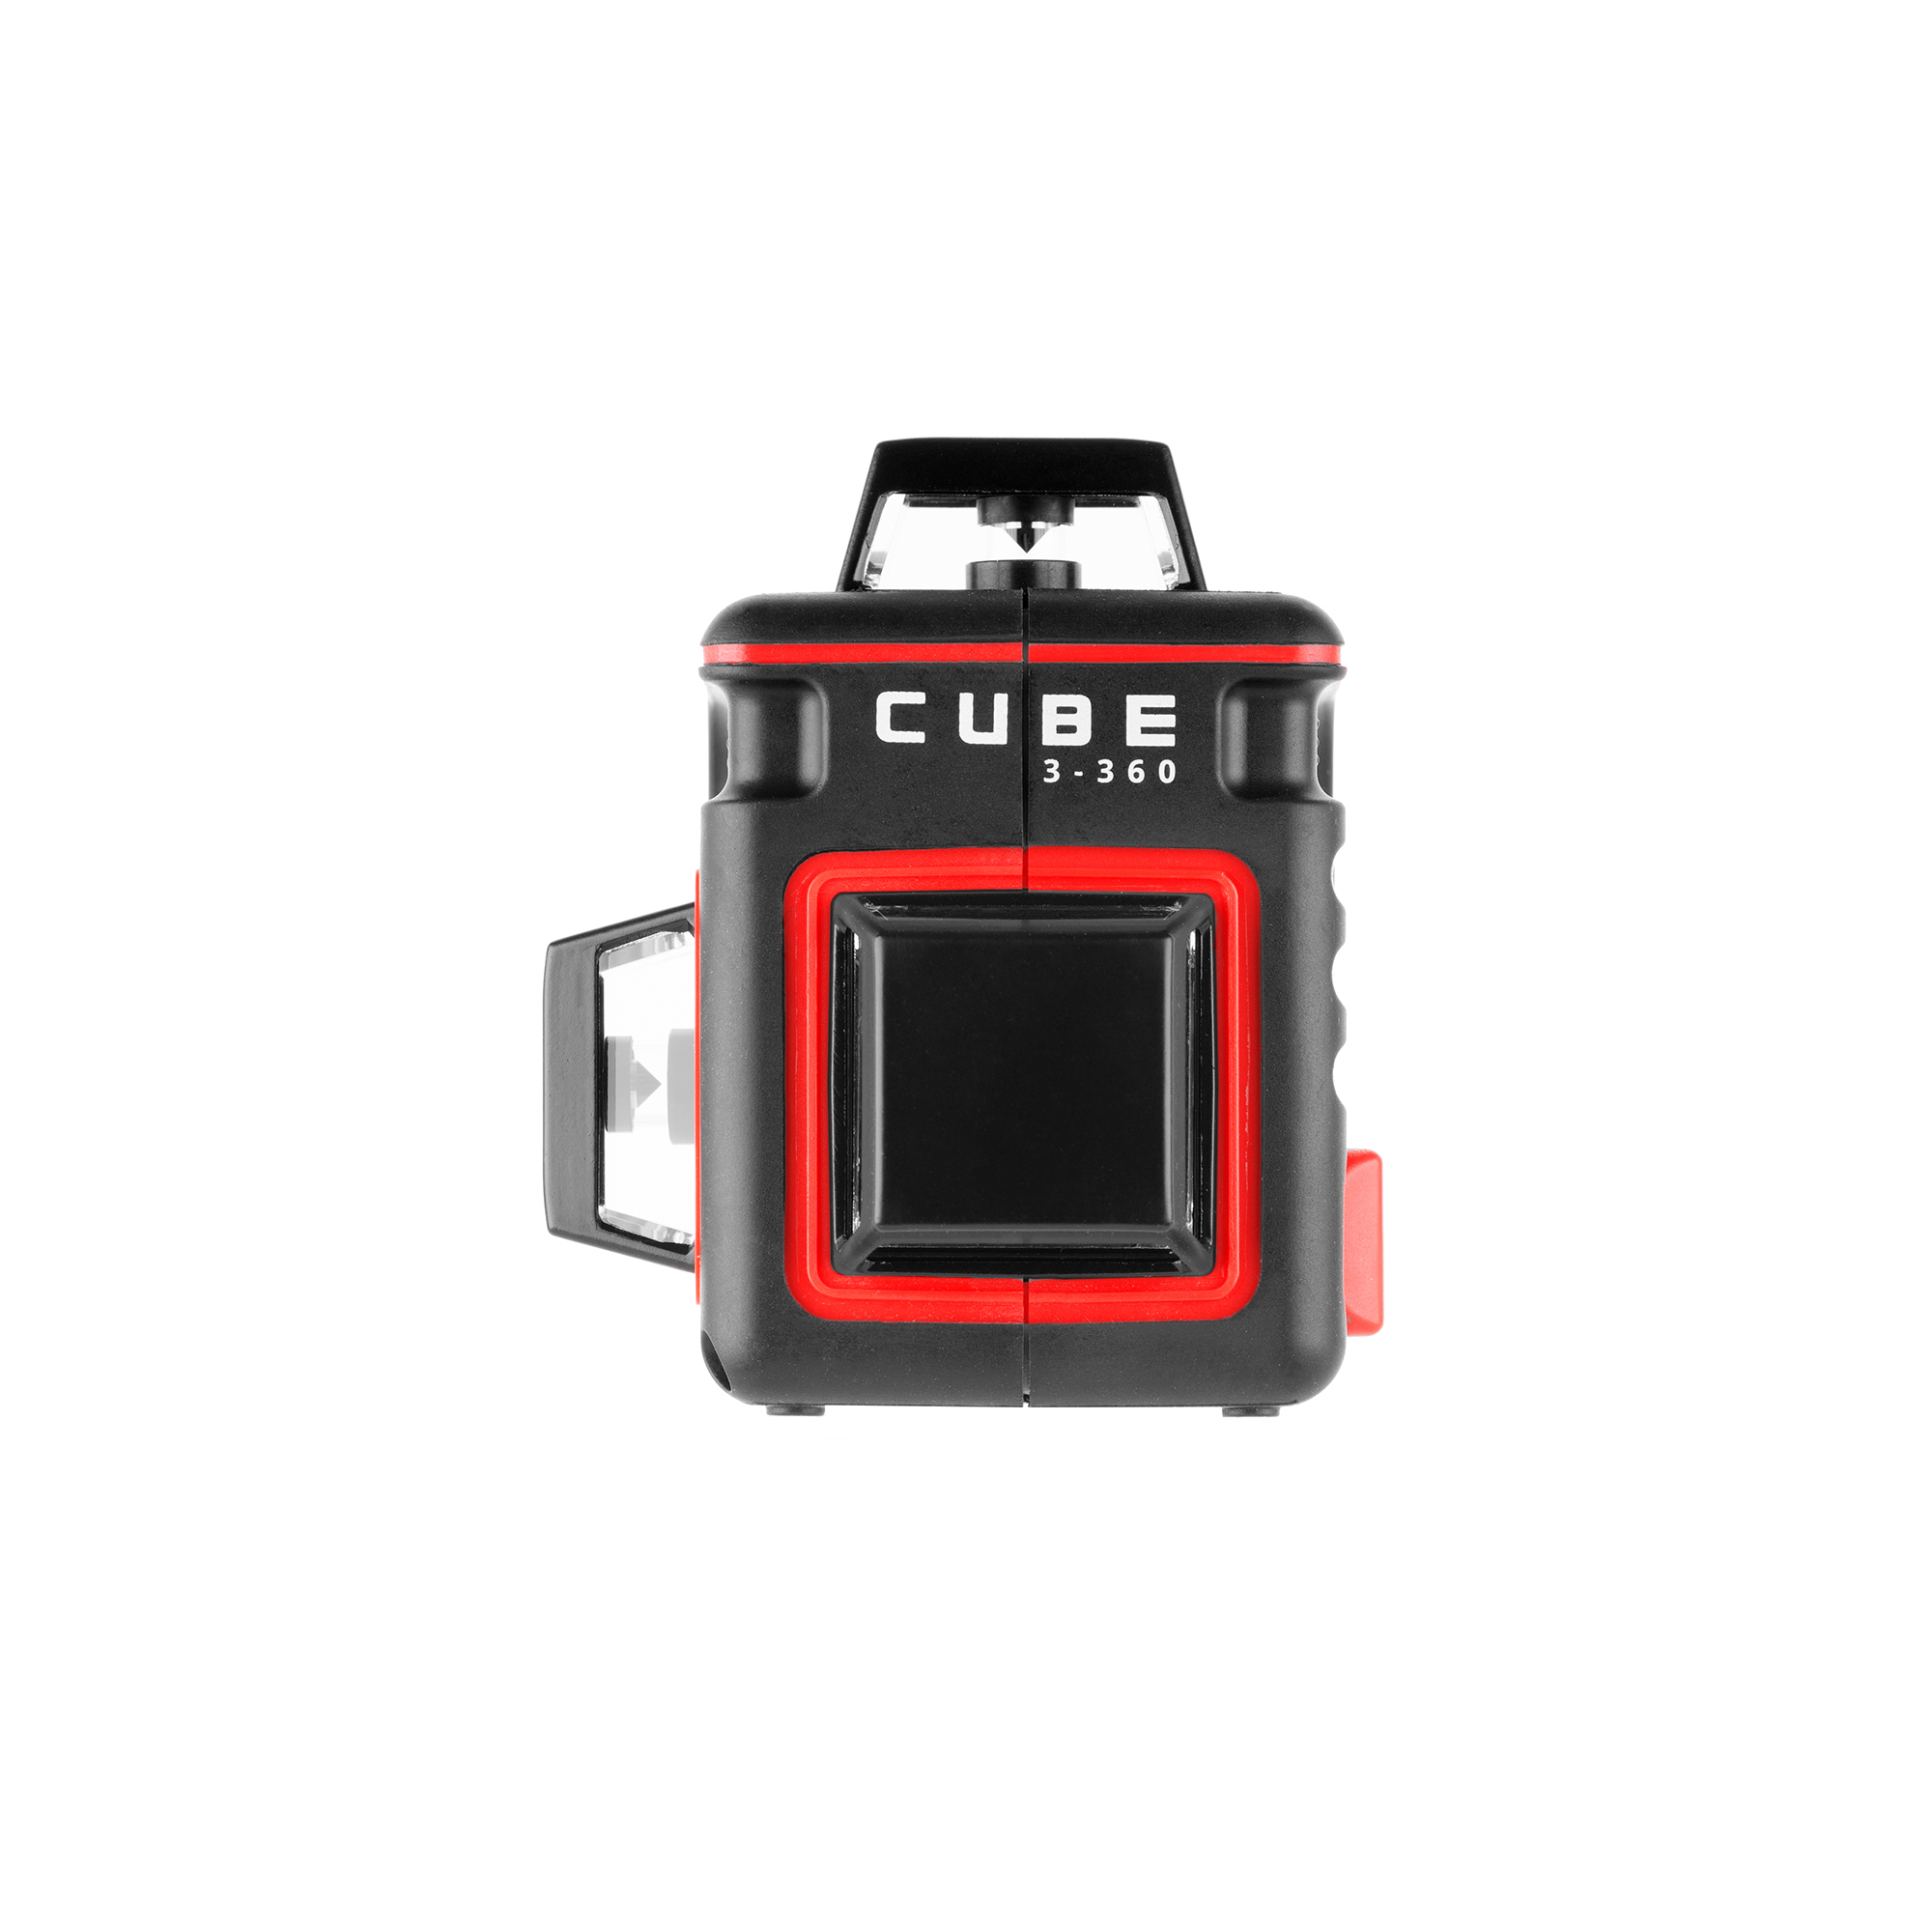 Ada instruments cube. Ada Cube 3-360 Basic Edition а00559. Лазерный нивелир ada Cube 3-360. Лазерный уровень Cube 3-360 Basic Edition. Лазерный уровень ada Cube 360 Basic Edition.